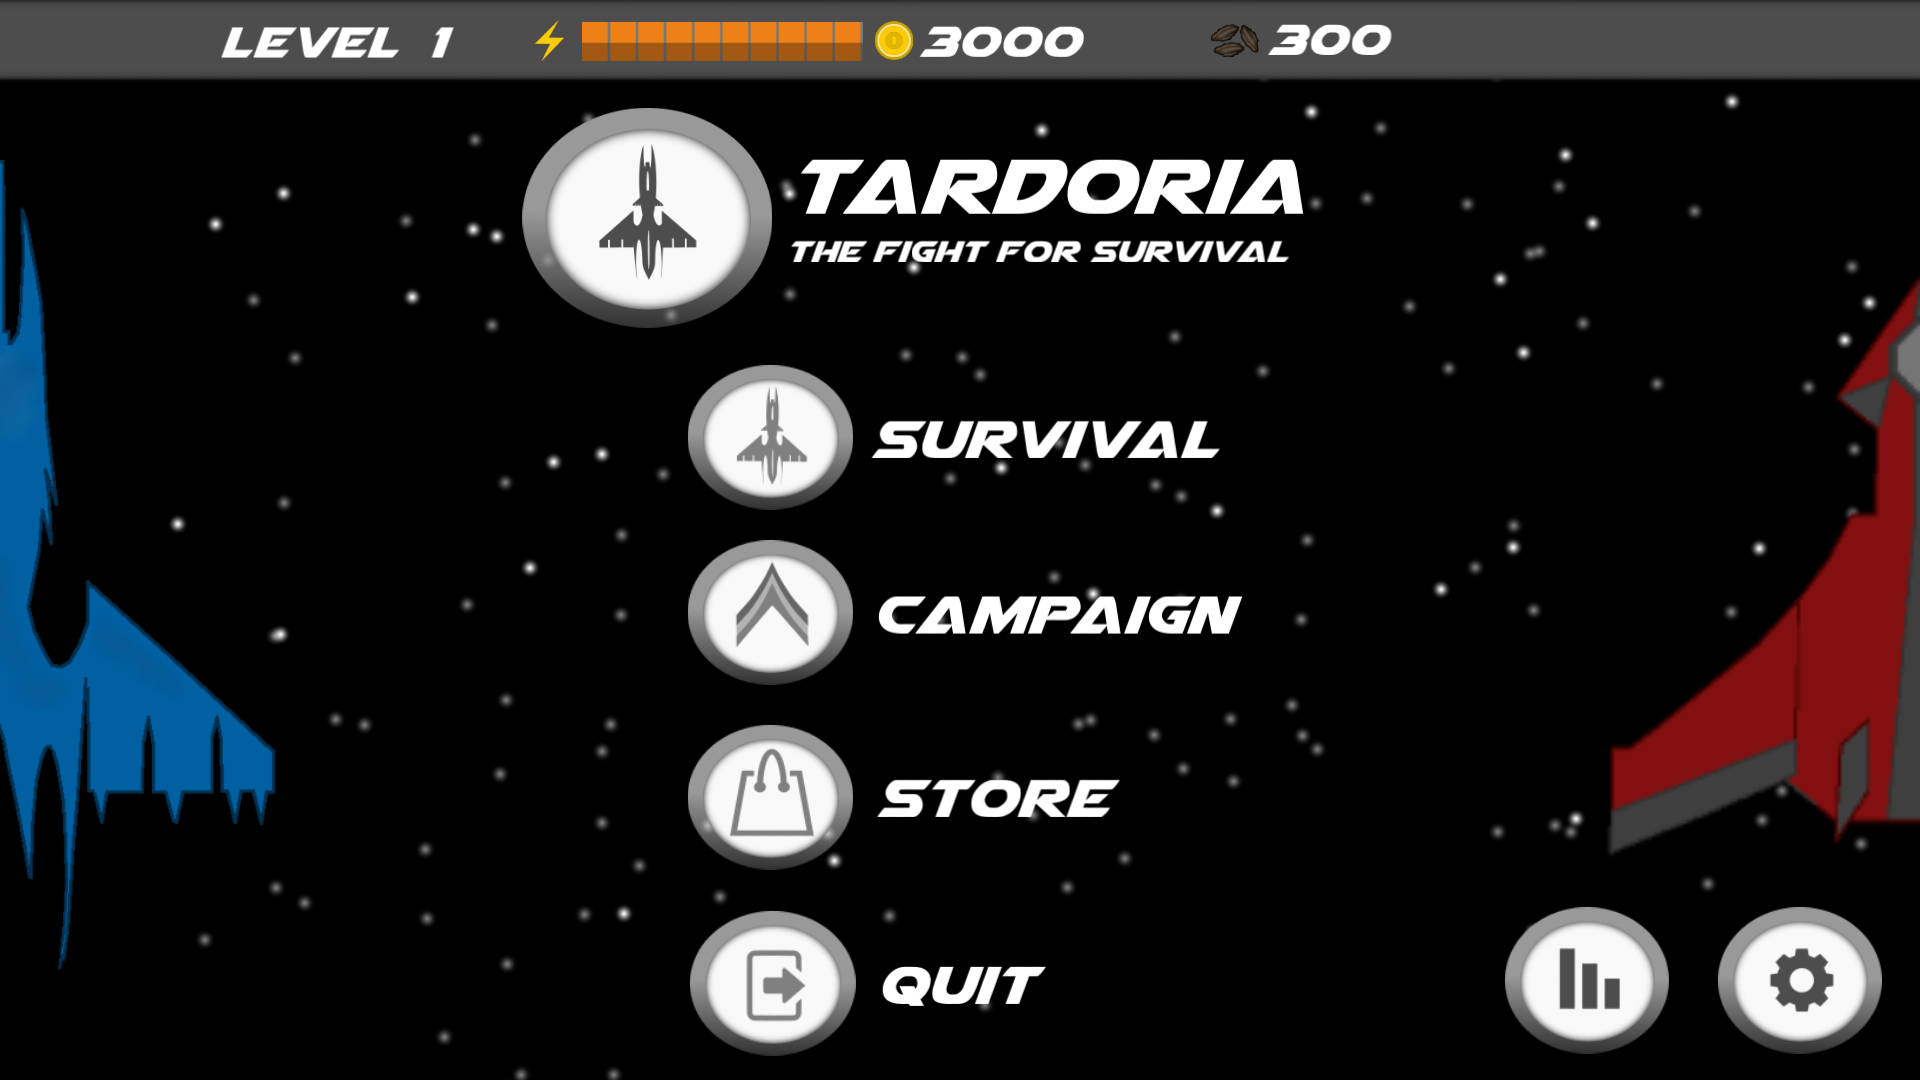 Menu screen of Tardoria